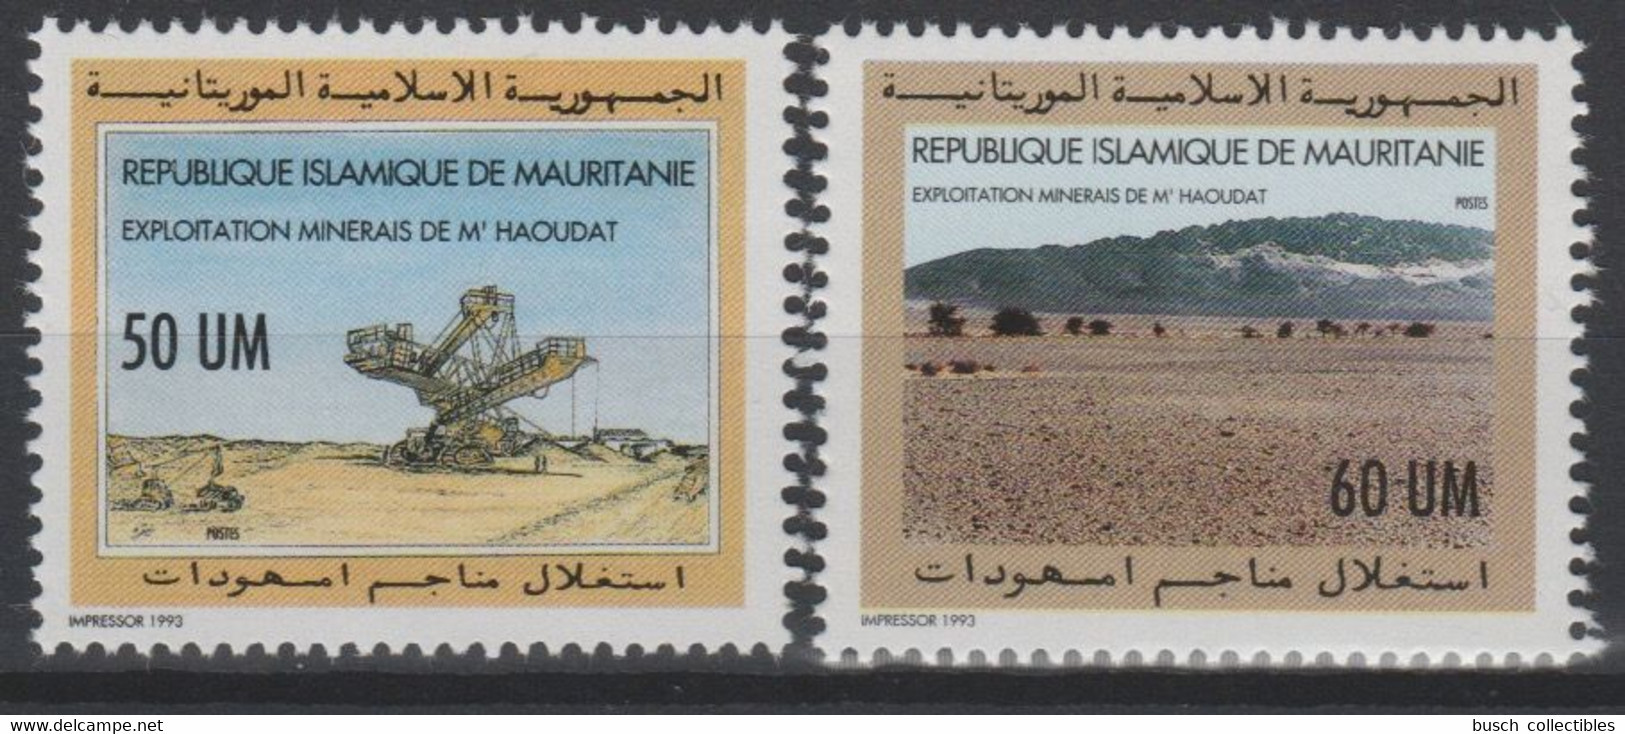 Mauritanie Mauretanien Mauritania 1993 Mi. 1010 - 1011 Exploitation Minerais M'Haoudat 2 Val. ** - Mauritania (1960-...)